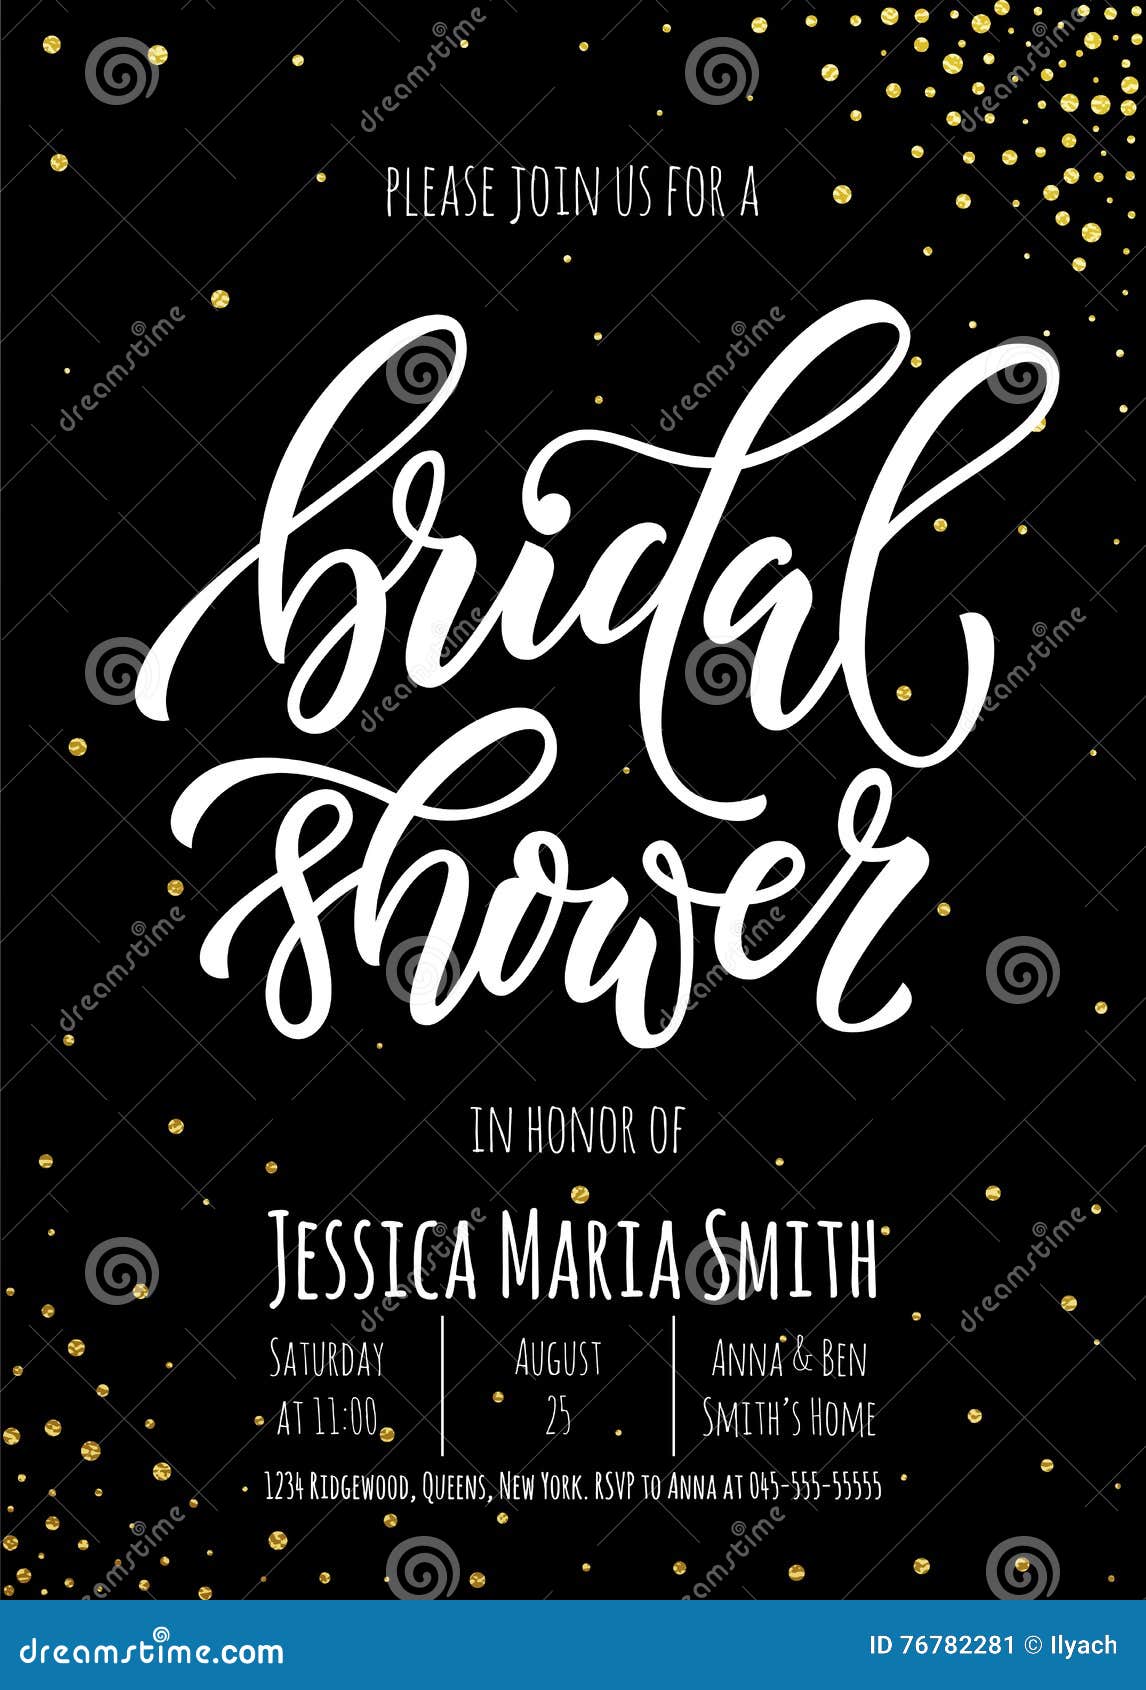 Bridal Shower Invitation Card Template. Stock Illustration Within Bridal Shower Banner Template